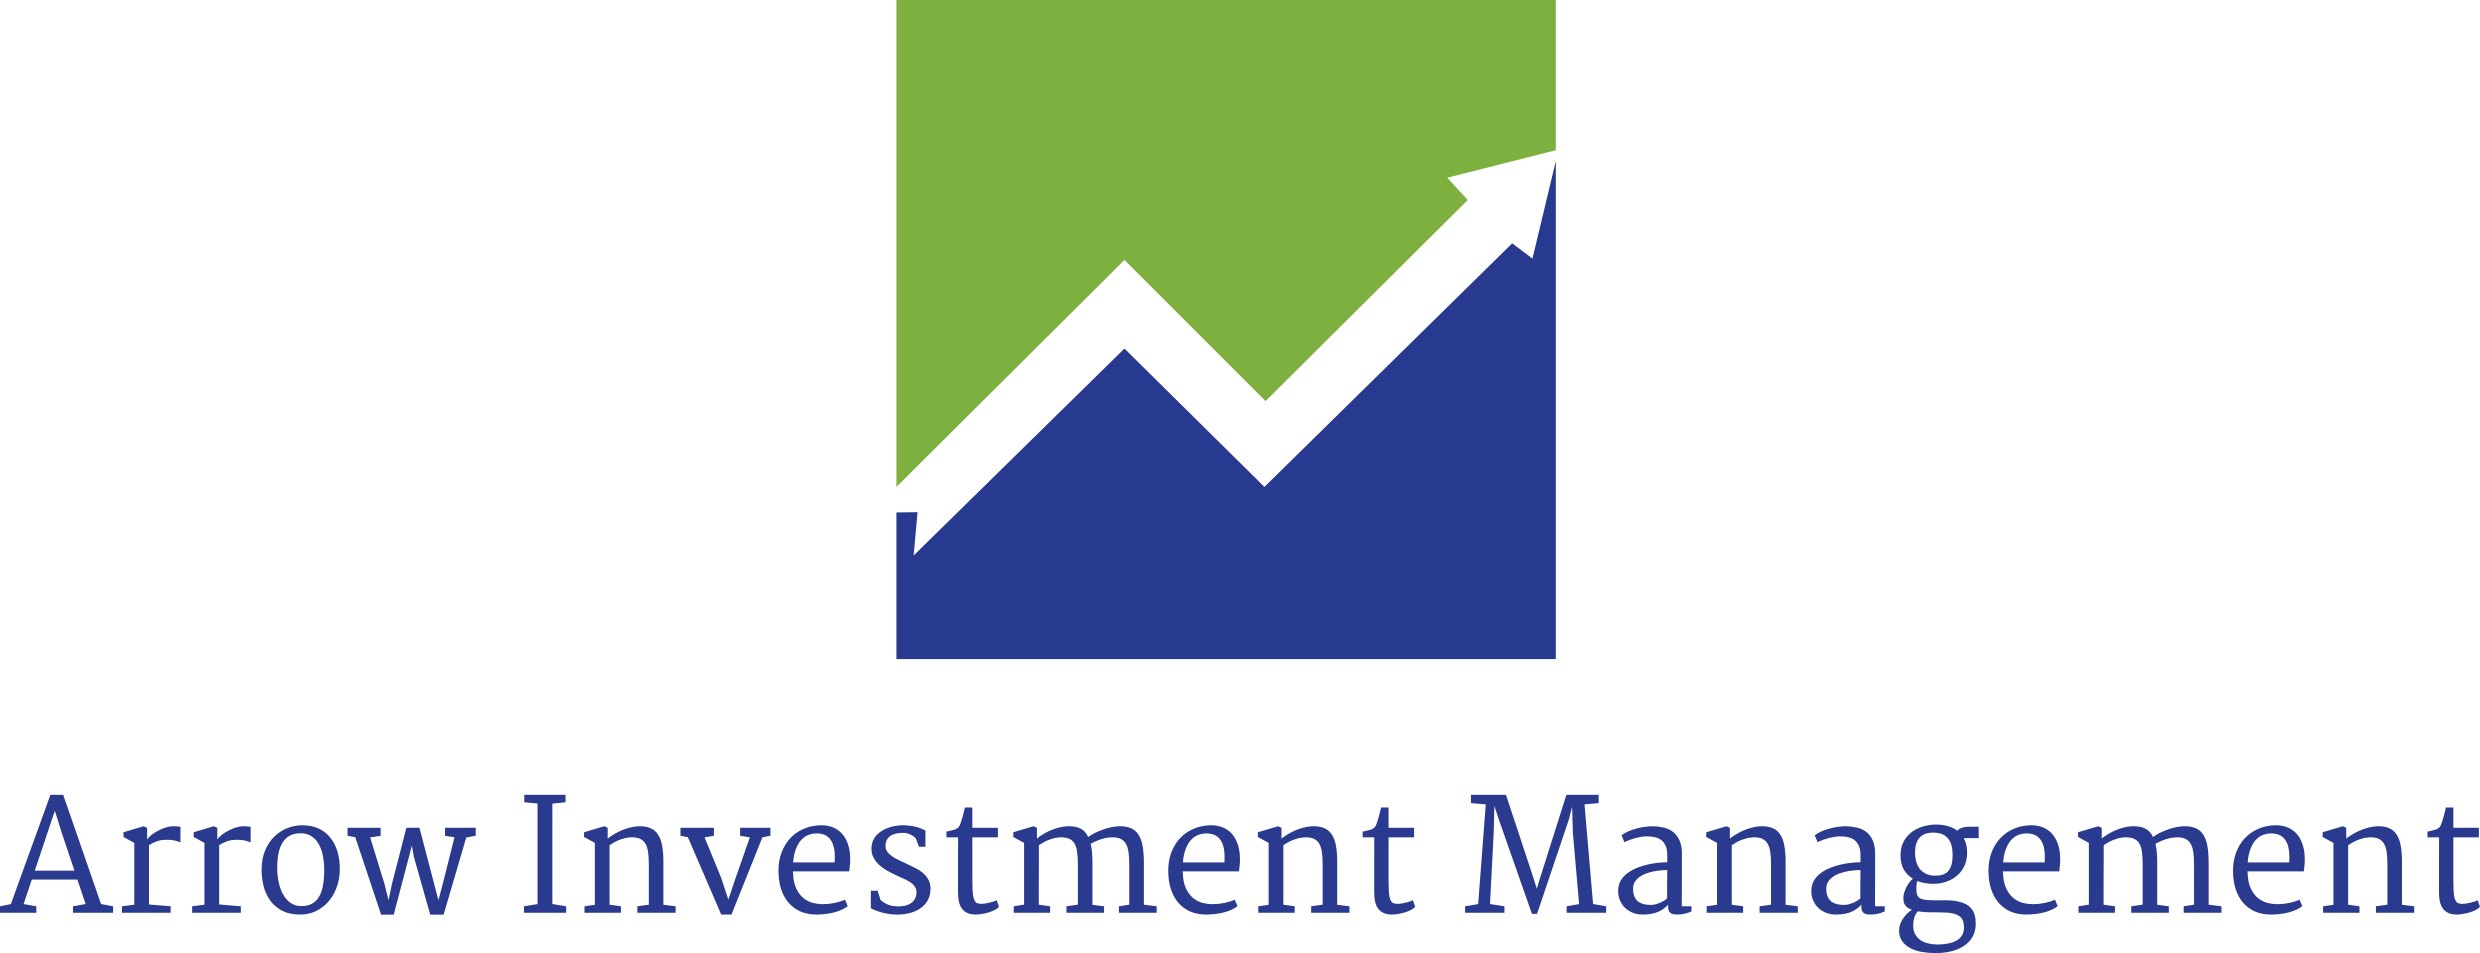 Arrow Investment Management